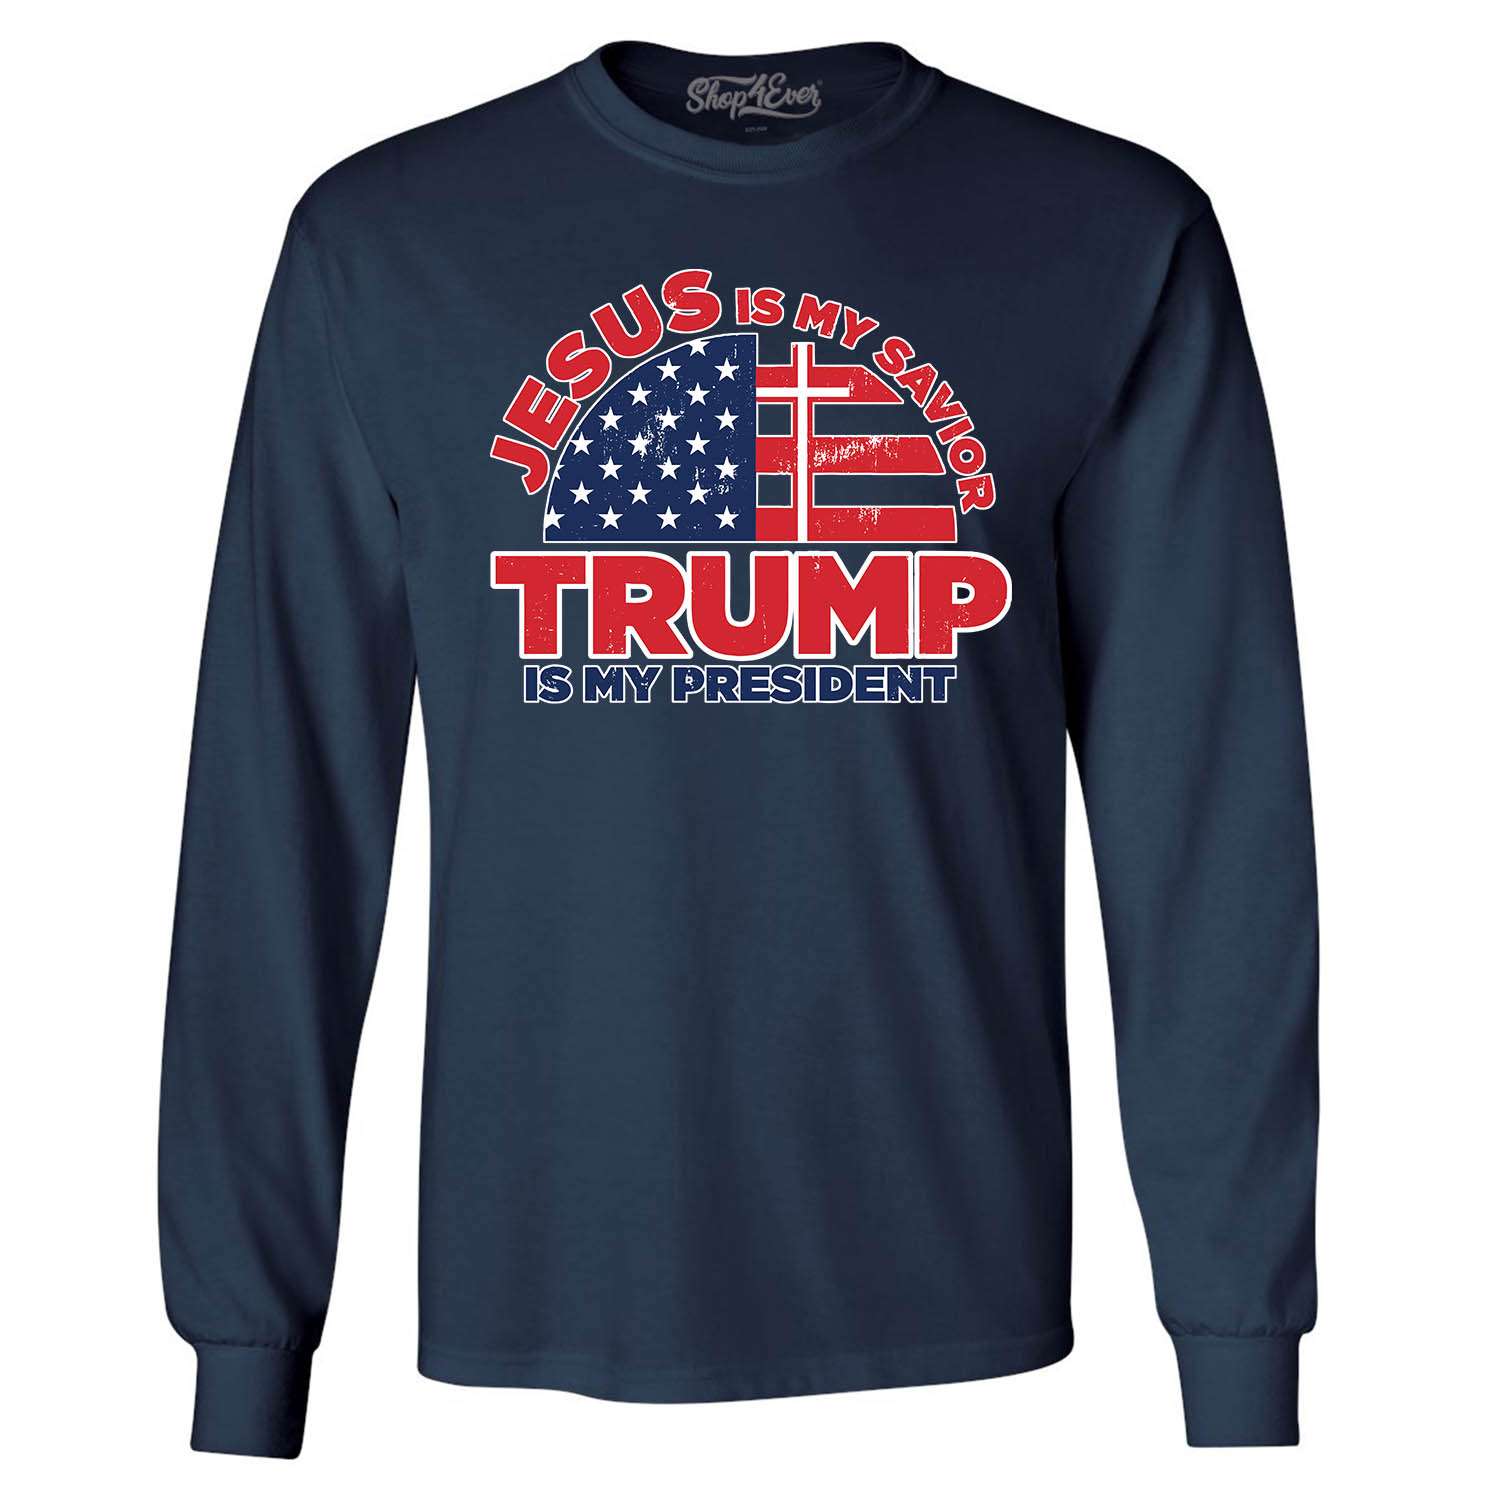 Jesus Is My Savior Trump Is My President Light Logo T Shirt 2020 MAGA Election